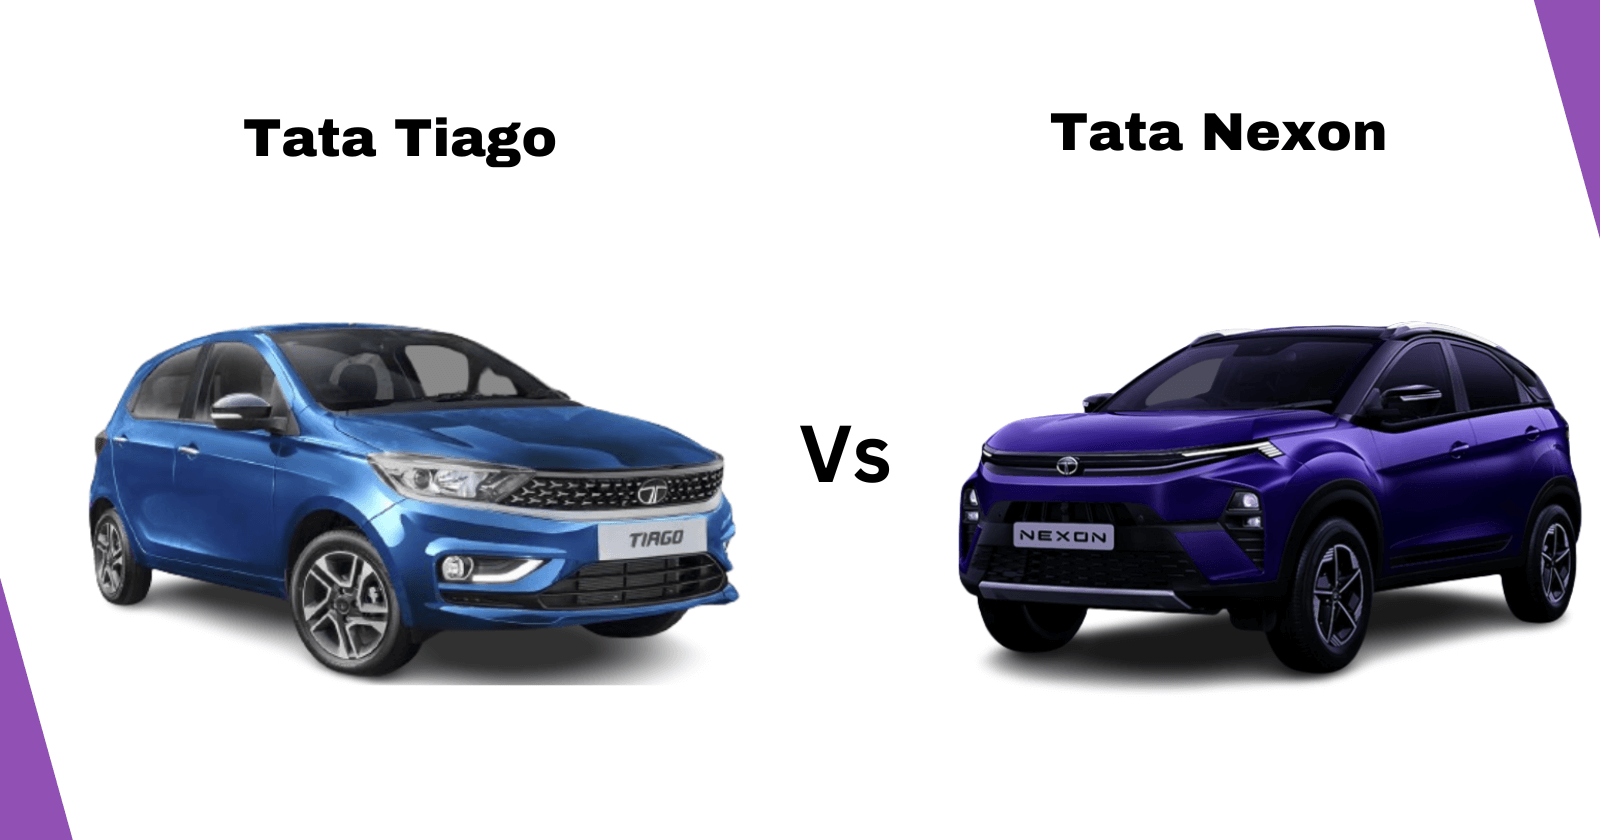 Tata Tiago vs Tata Nexon 